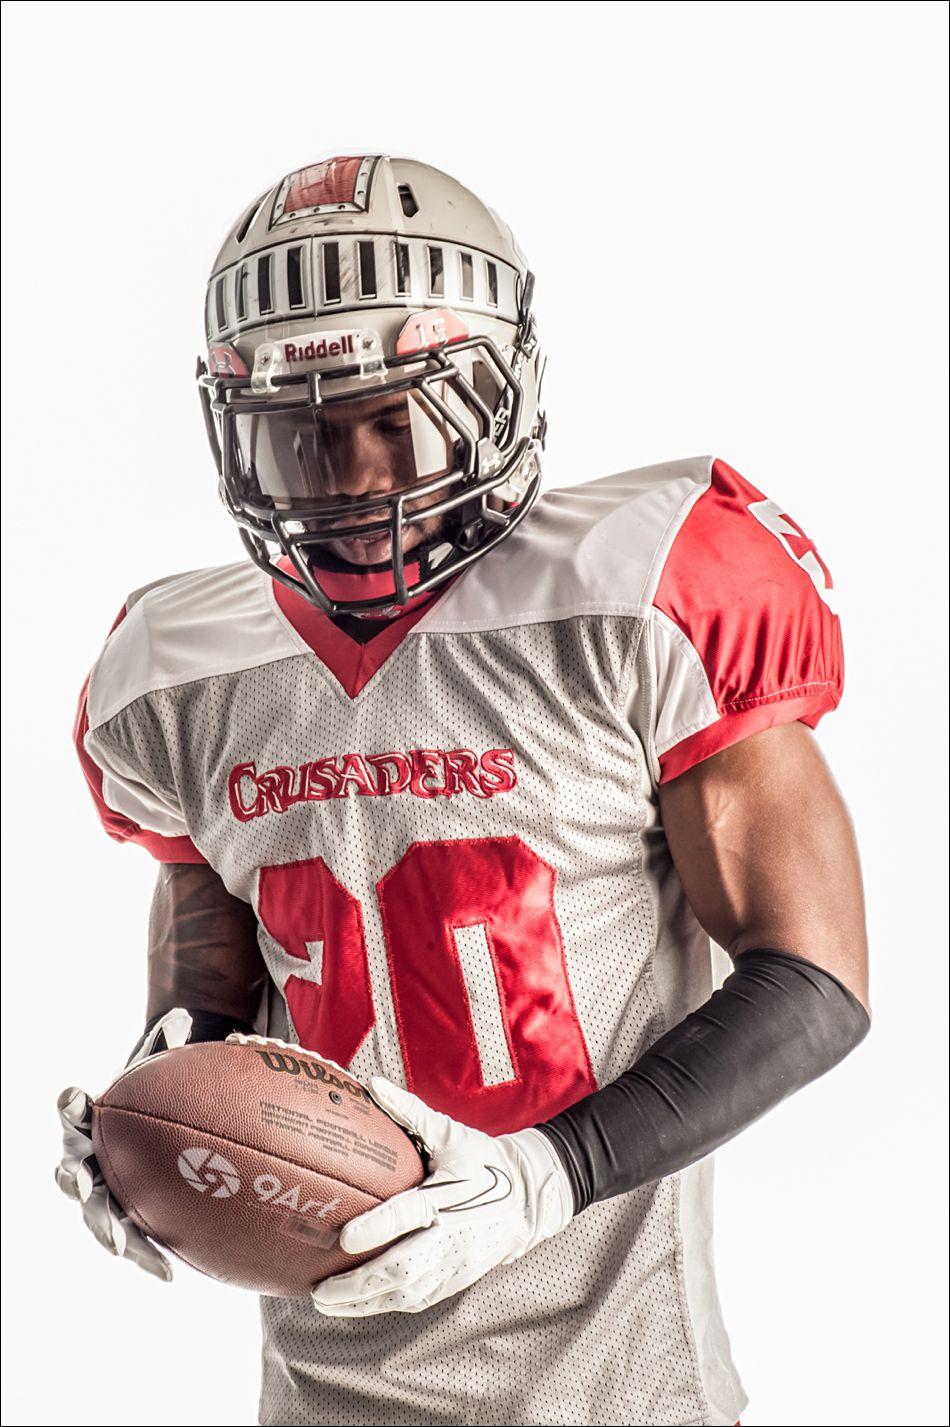 Crusaders as Team Logo - Joplin Crusaders:: 9art tries on sports « 9art photography - joplin ...